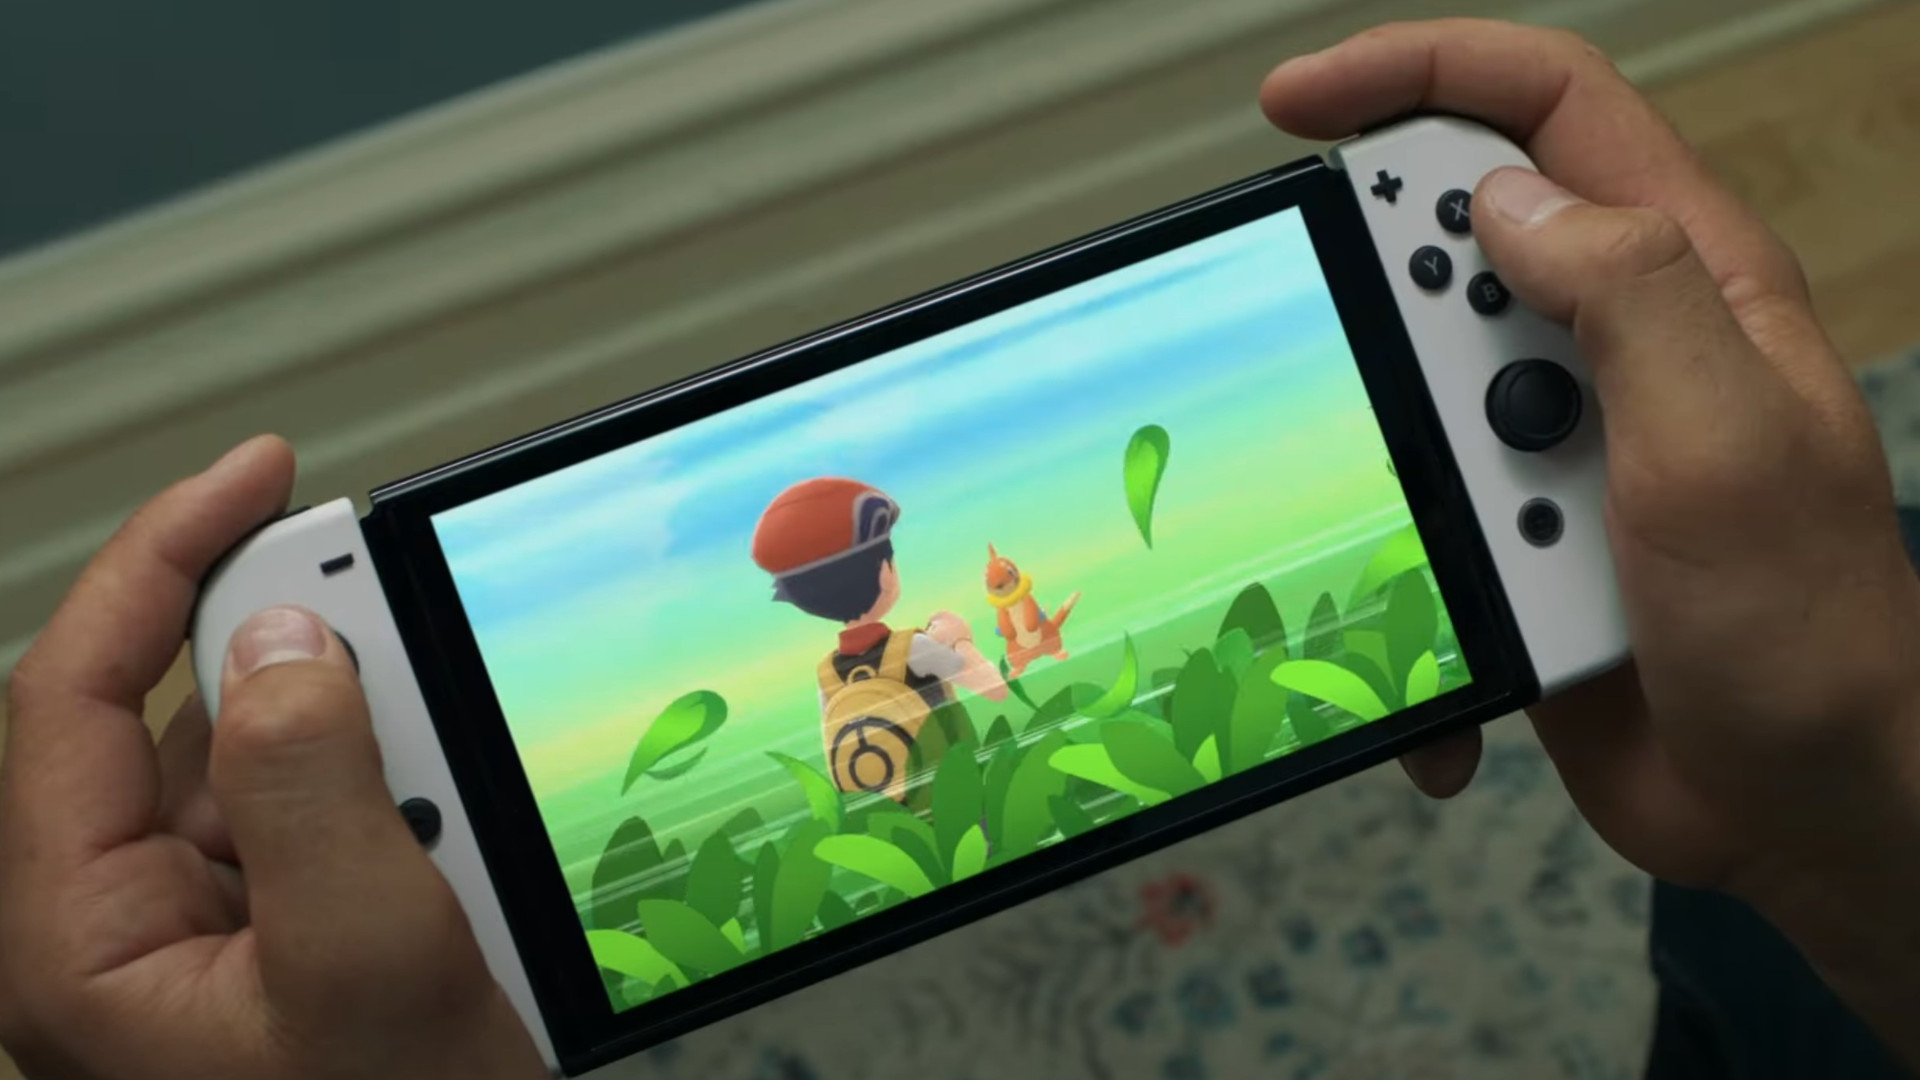 Нажмите изображение OLED-дисплея Nintendo Switch